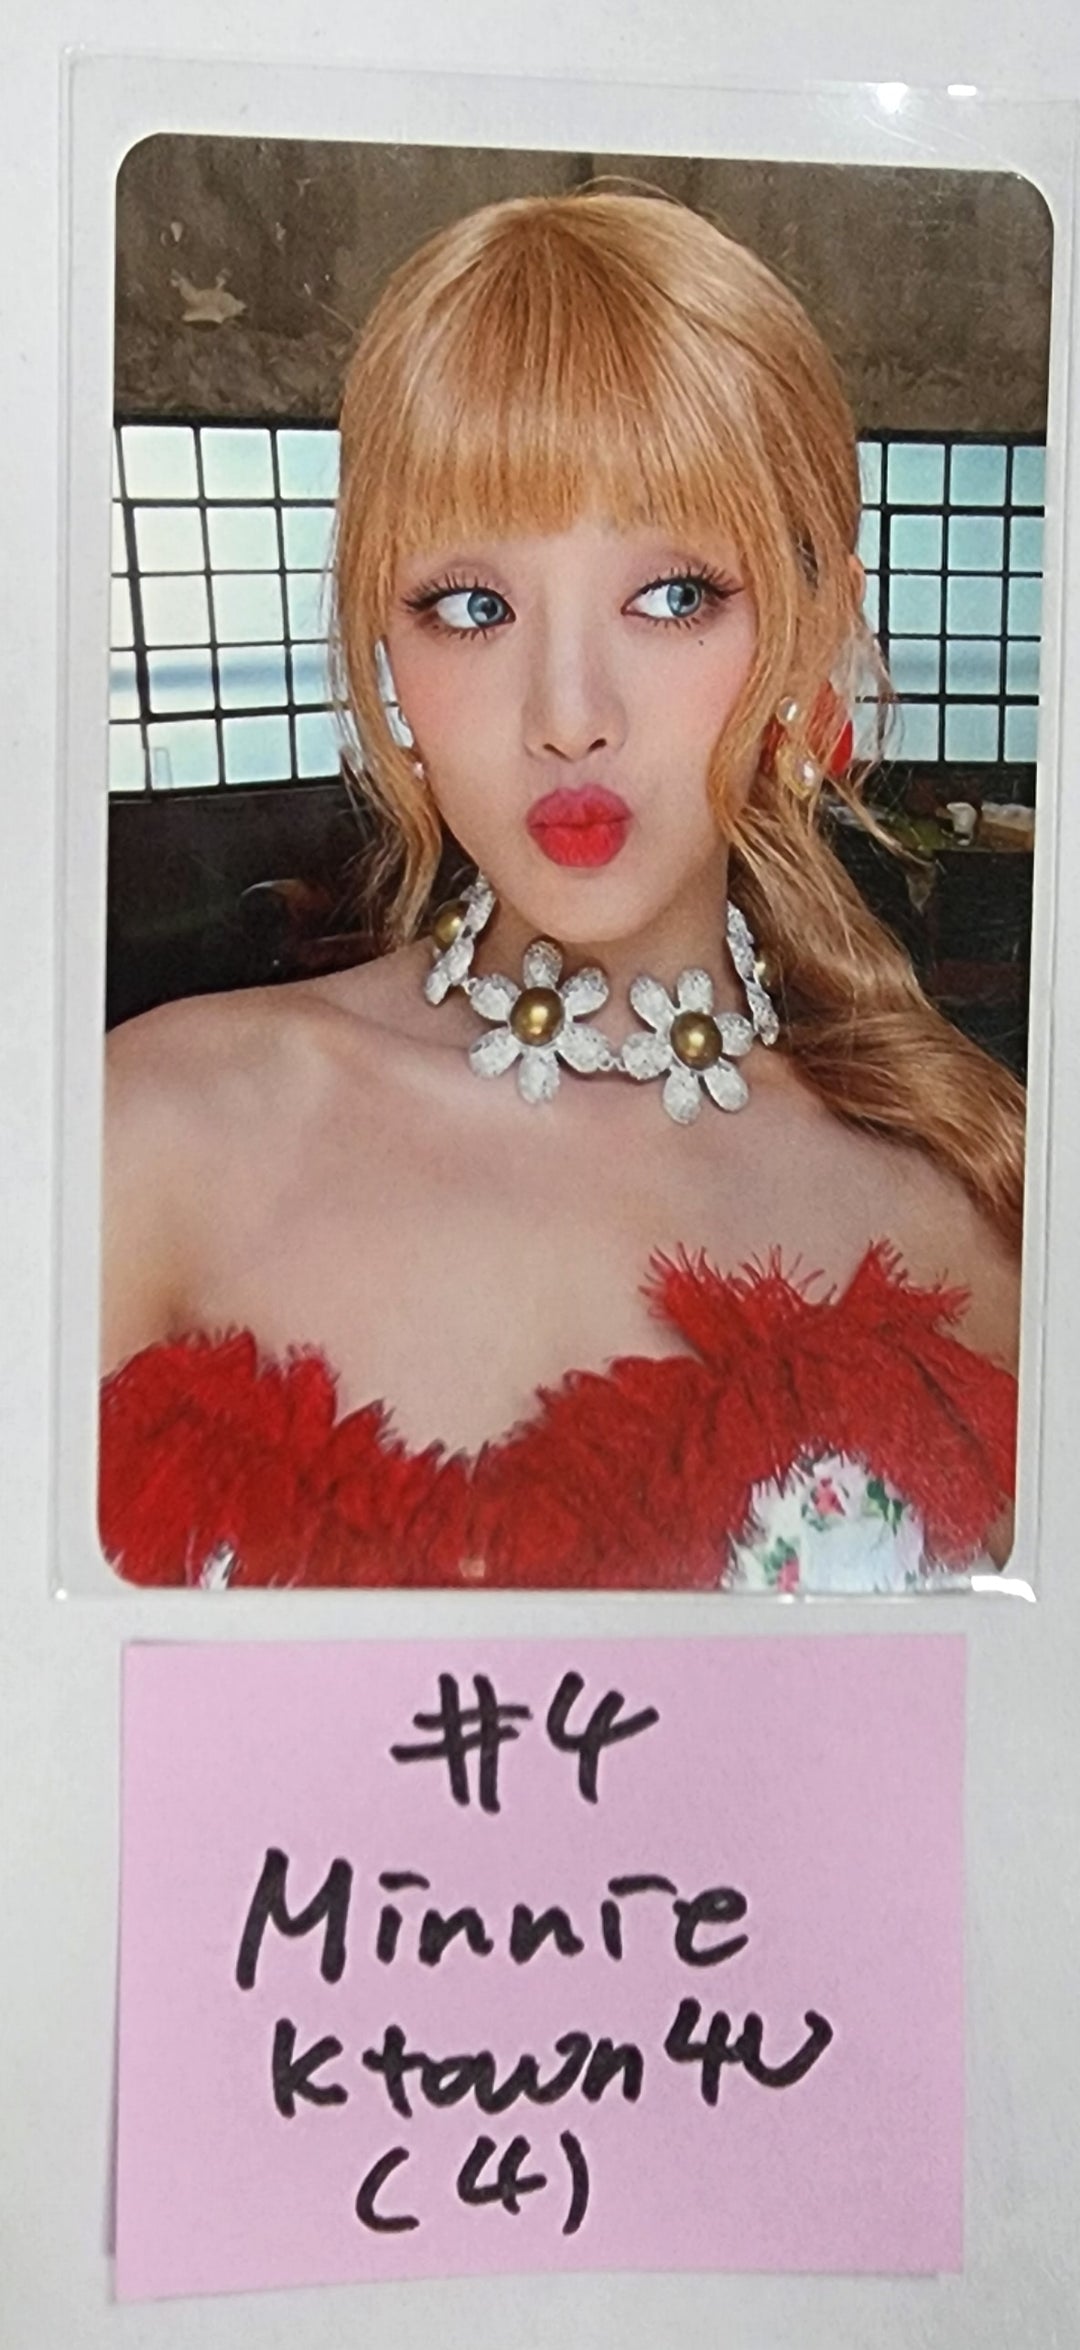 (g) I-DLE "I LOVE" - Ktown4U Lucky Draw Event Photocard